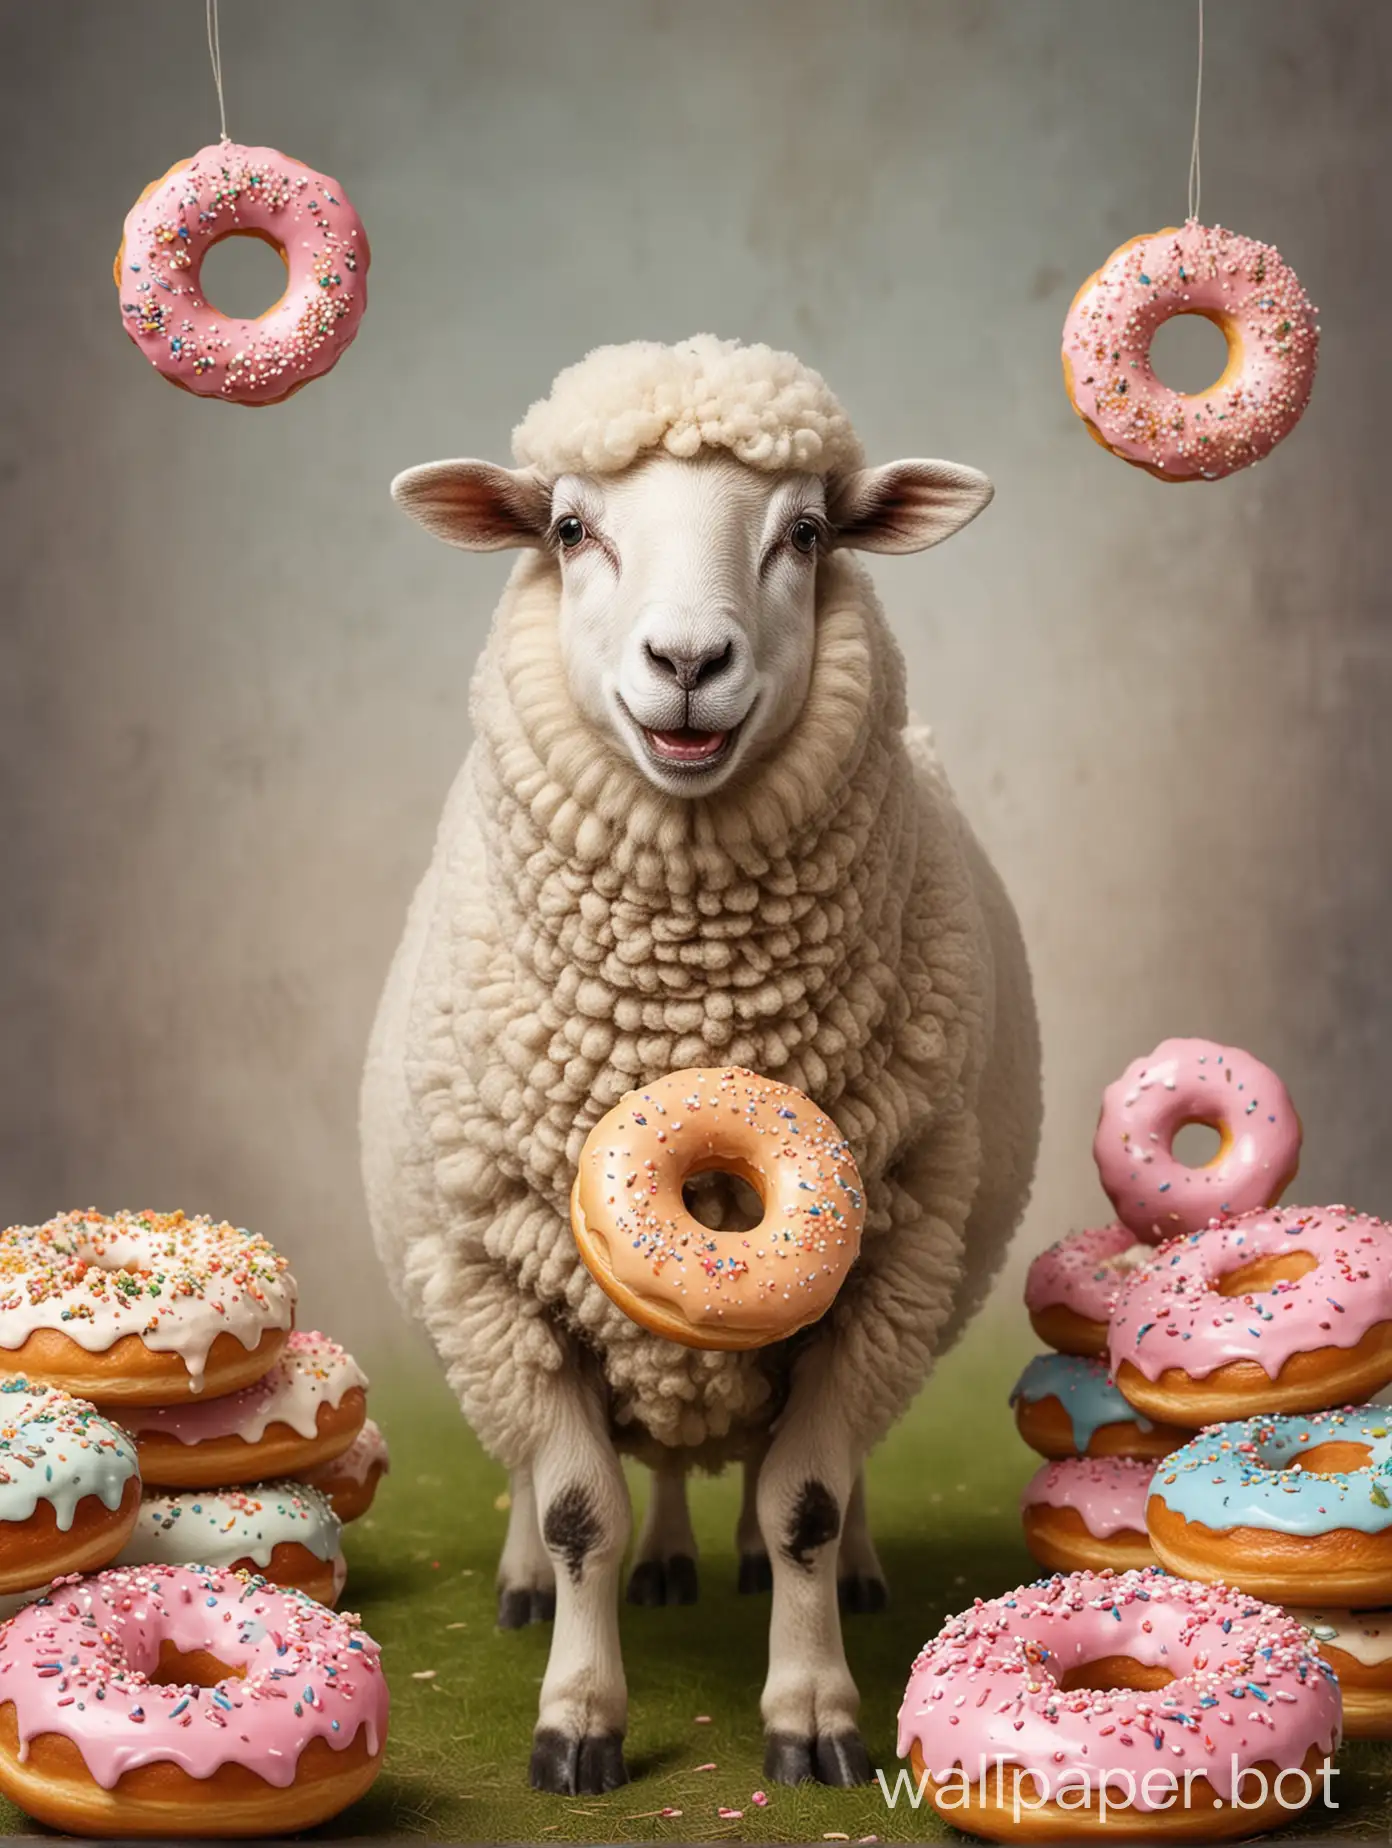 Cheerful-Sheep-Enjoying-Donuts